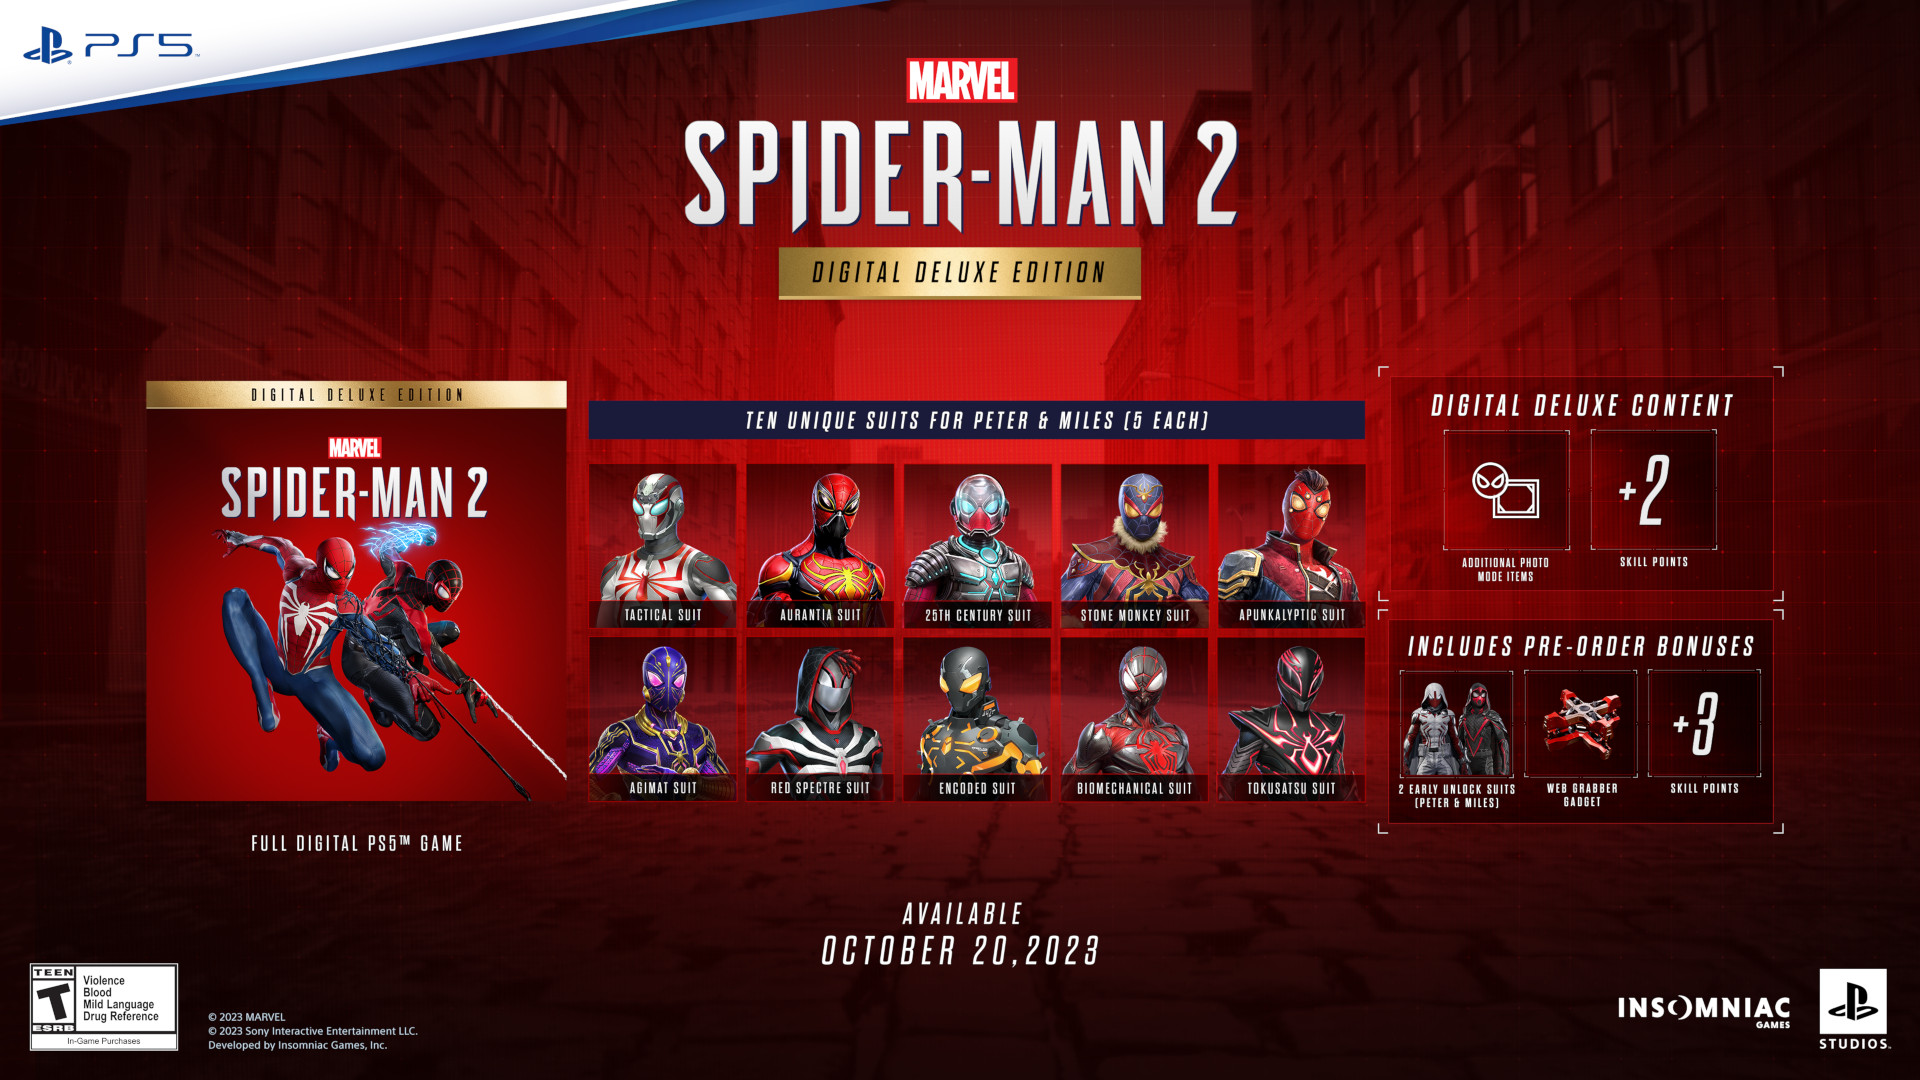 Marvels Spider-Man 2 Digital Deluxe Edition